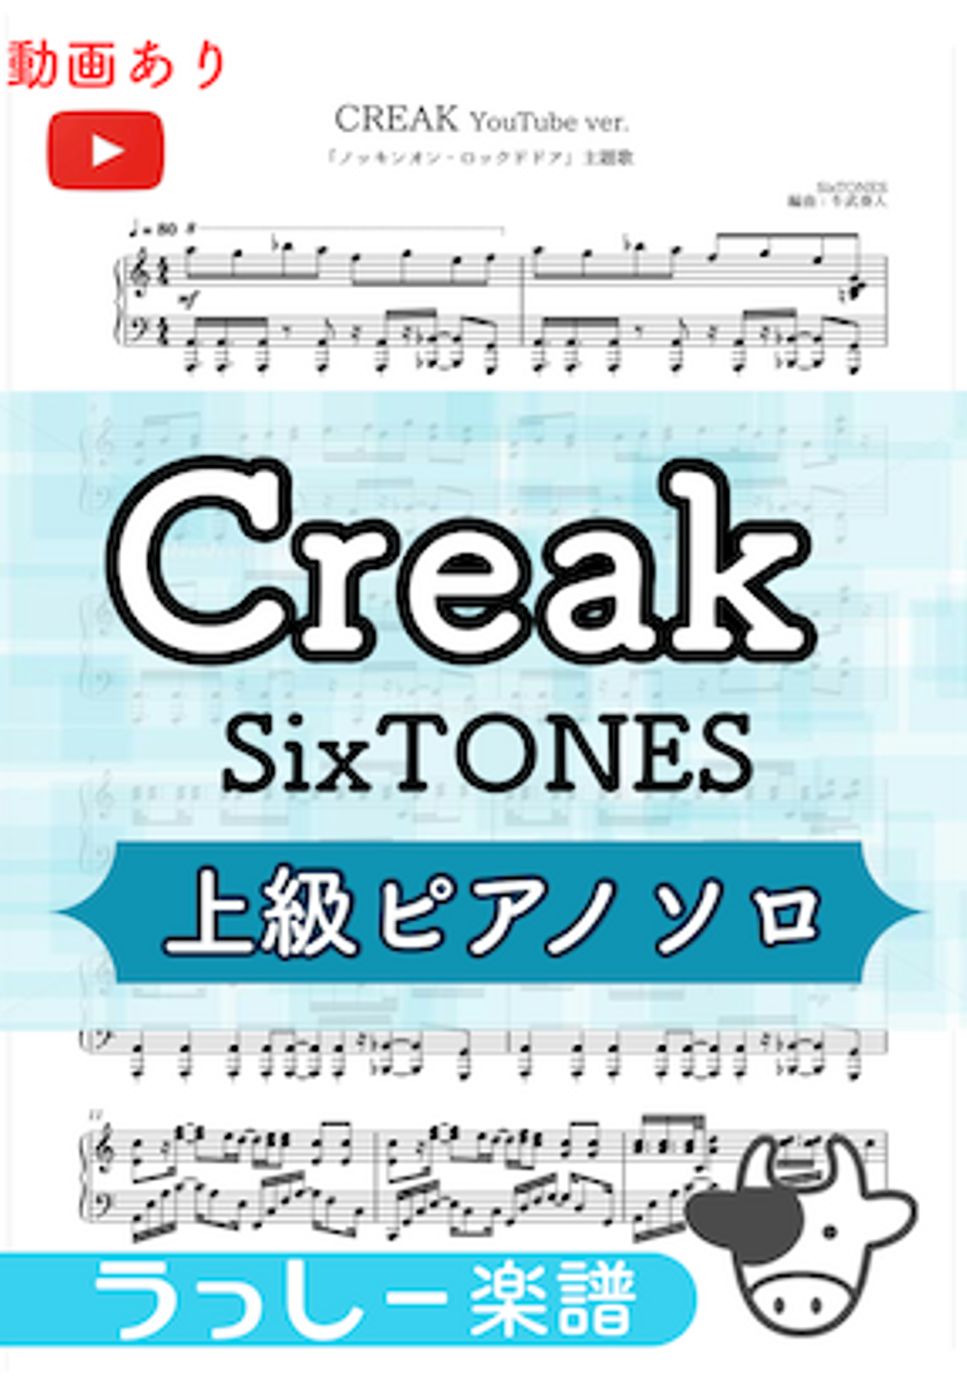 SixTONES - Creak (「ノッキンオン・ロックドドア」主題歌) by 牛武奏人